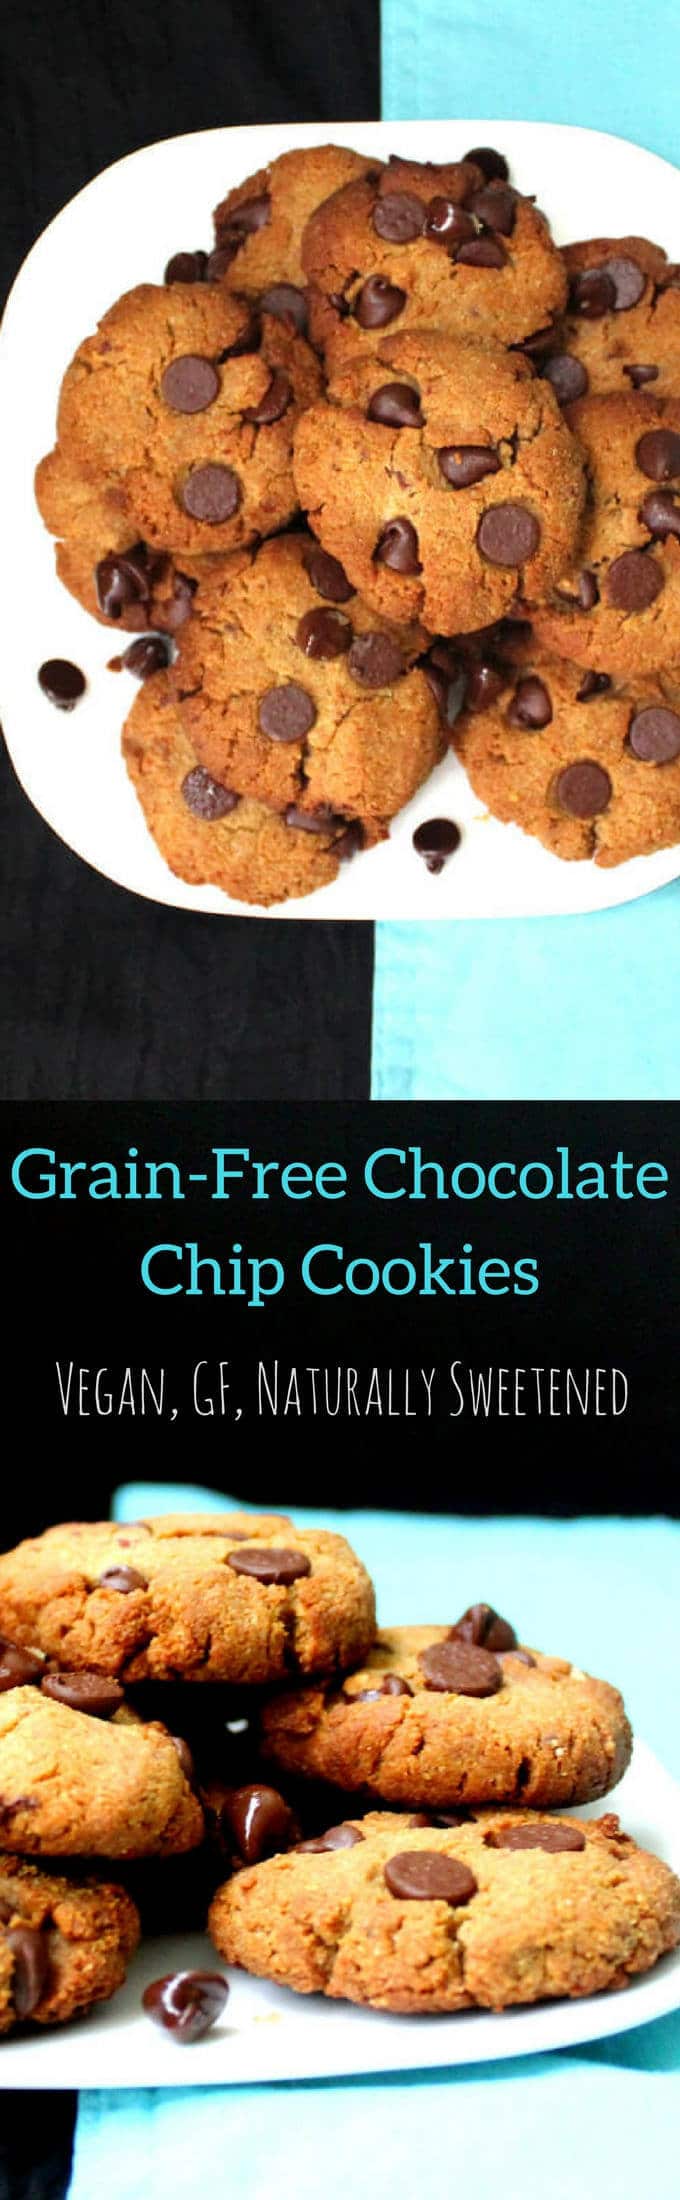 Images of grain free chocolate chip cookies with text that says "grain free chocolate chip cookies, vegan, gf, naturally sweetened"